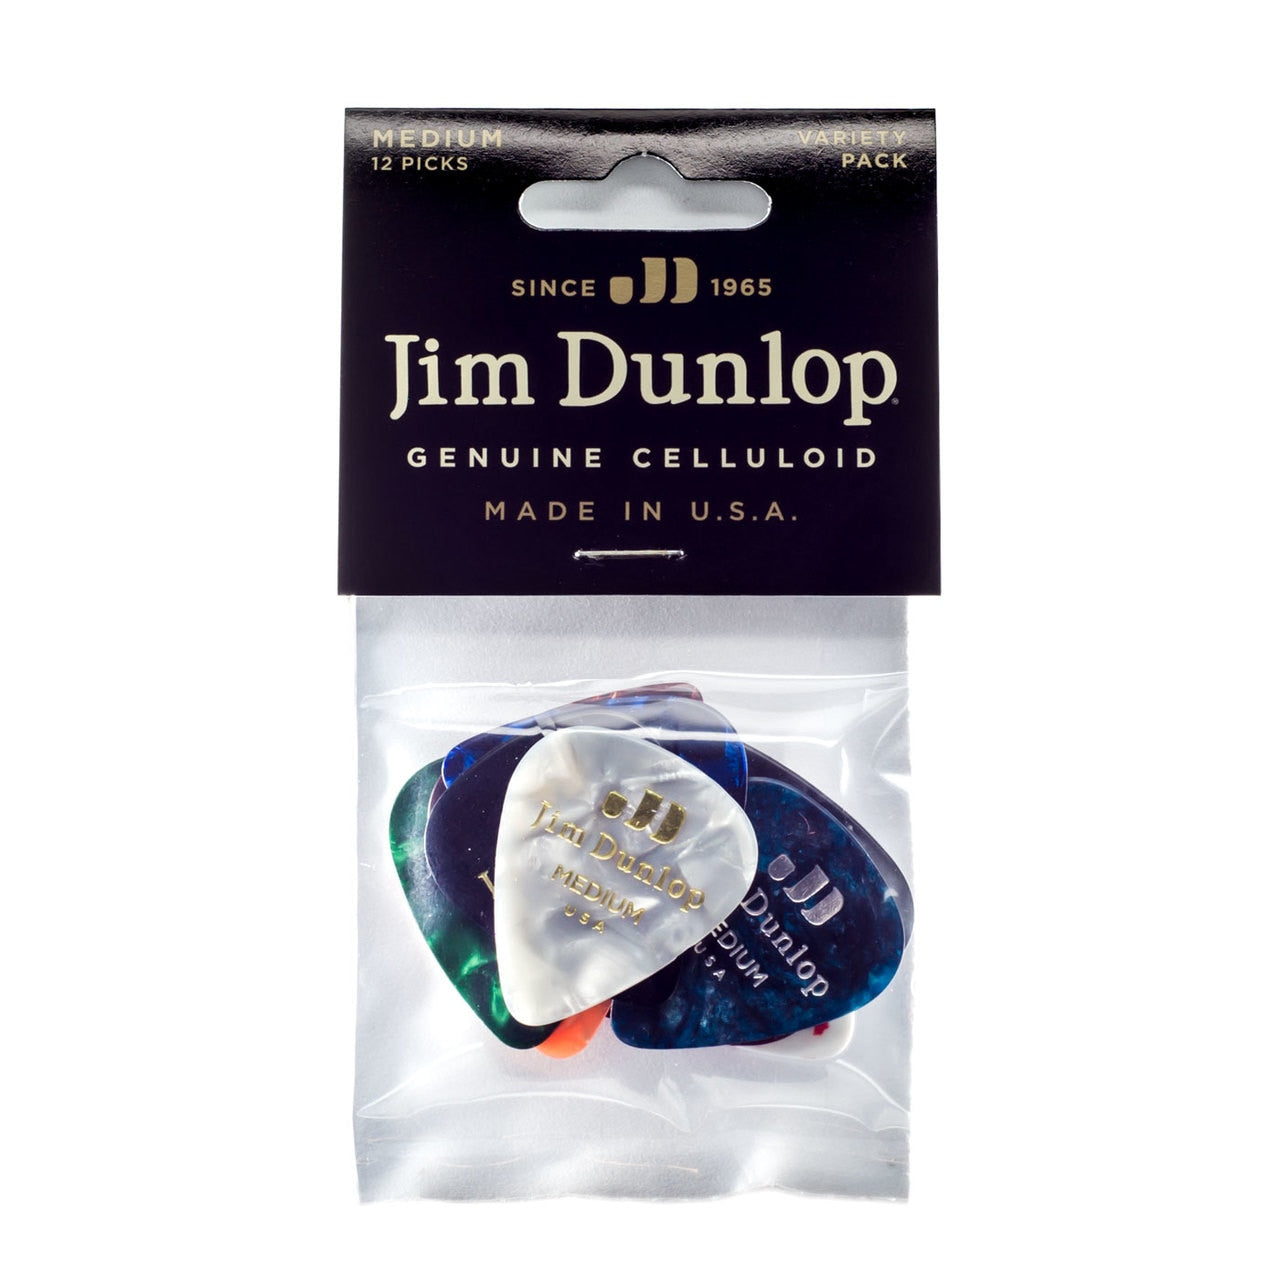 Dunlop Celluloid Picks Medium Variety Pack, 12-Pack